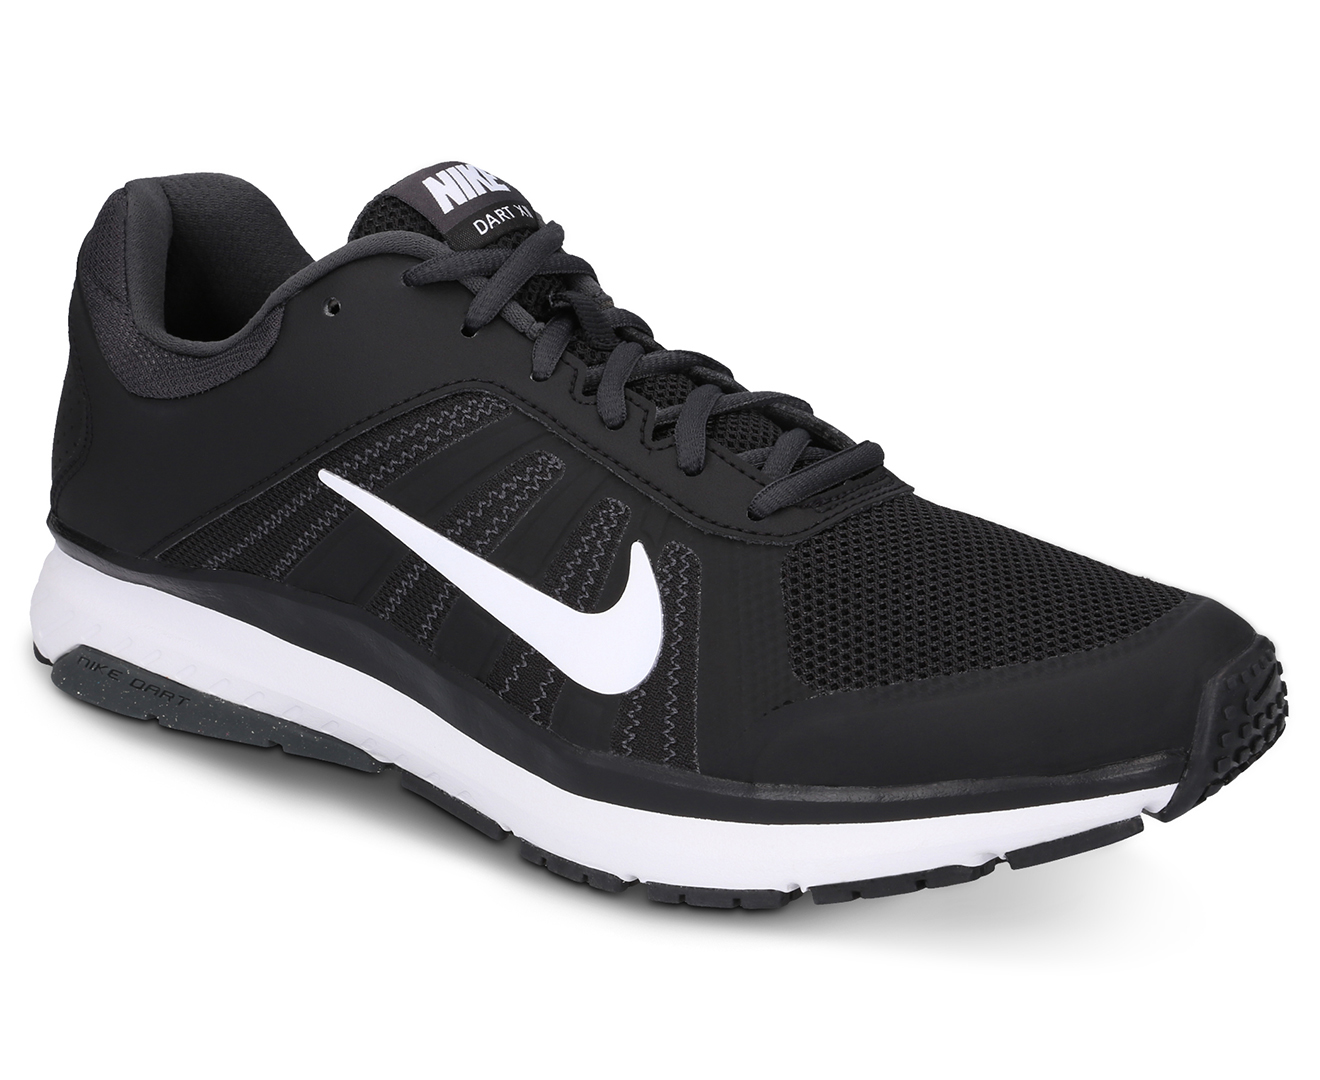 Nike Men's Dart 12 MSL Running Shoes - Black/White/Anthracite | Catch.co.nz